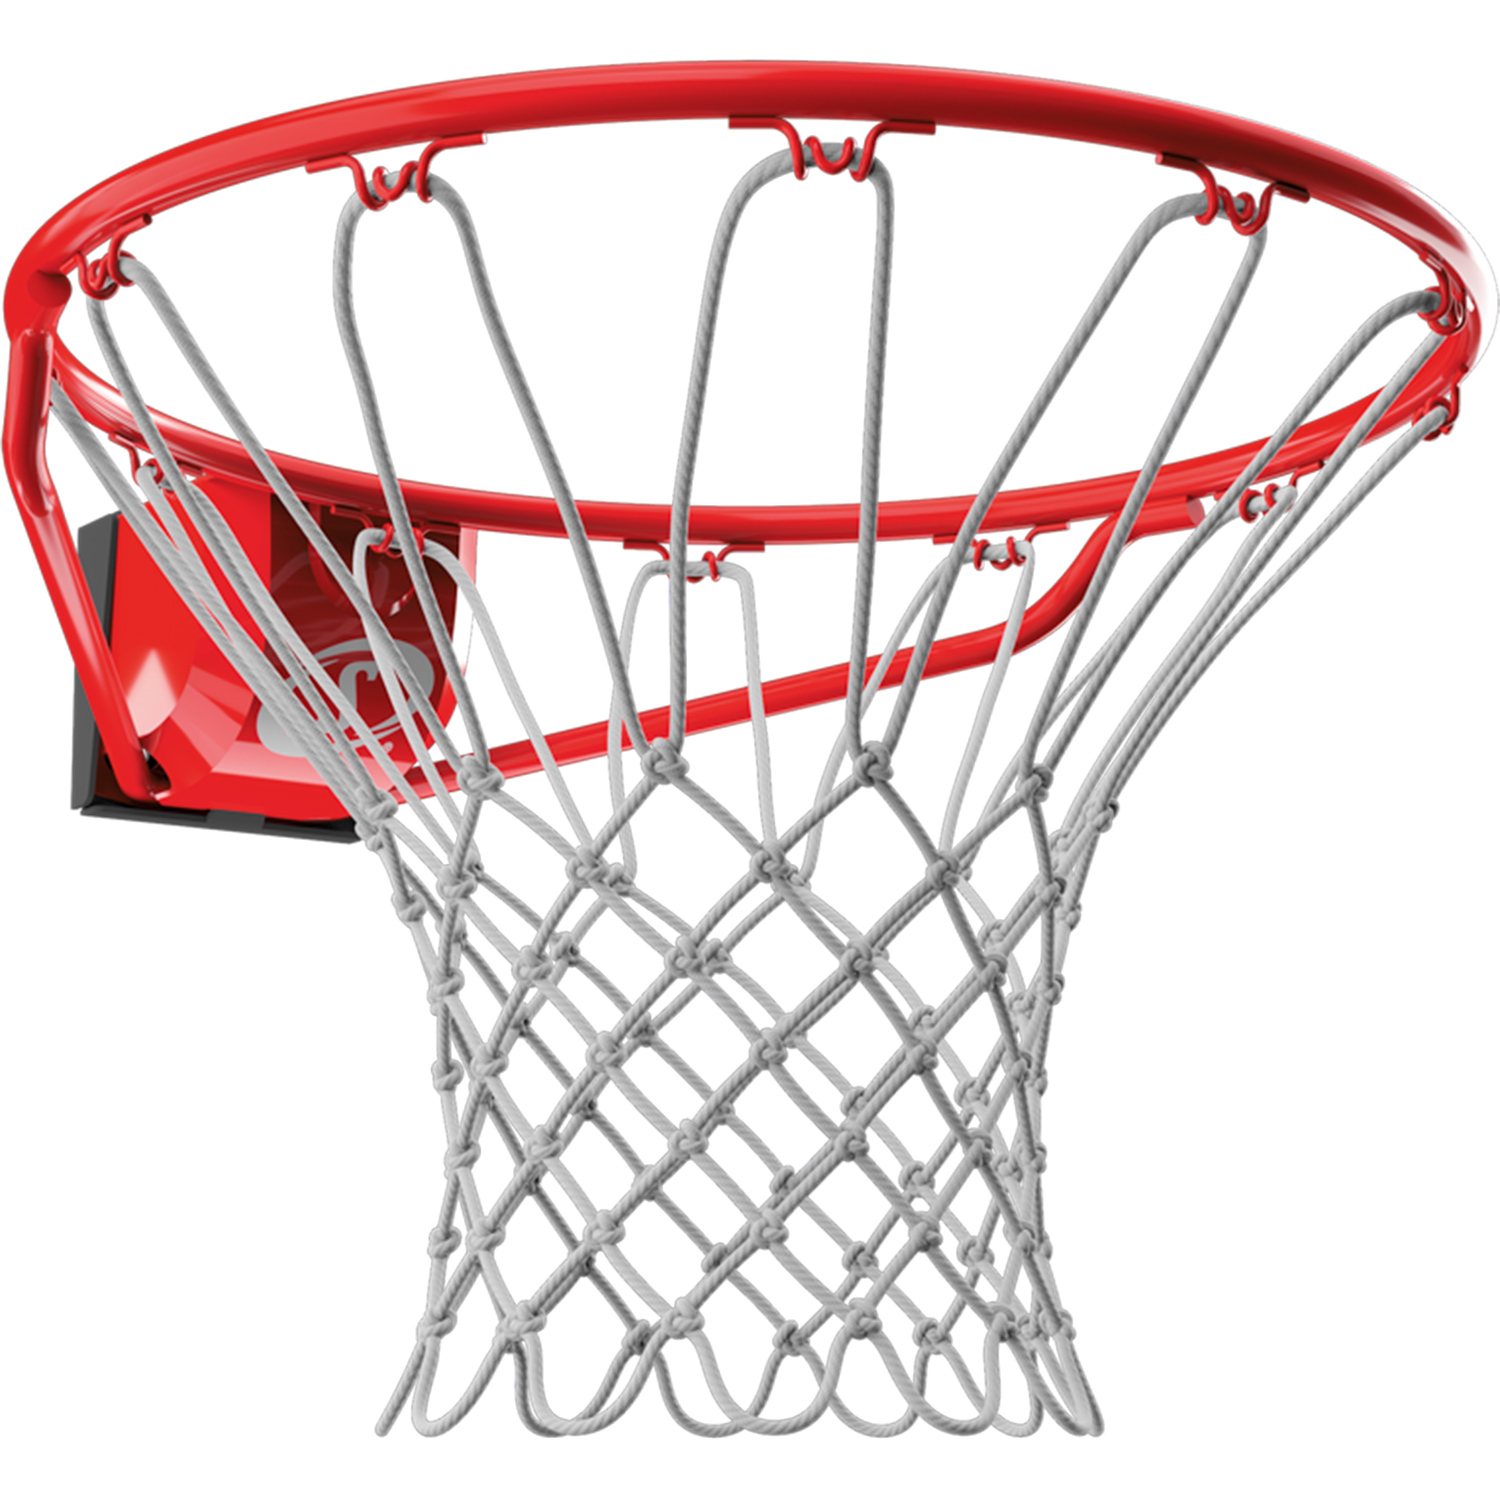 Spalding basketbal ring pro slam rood